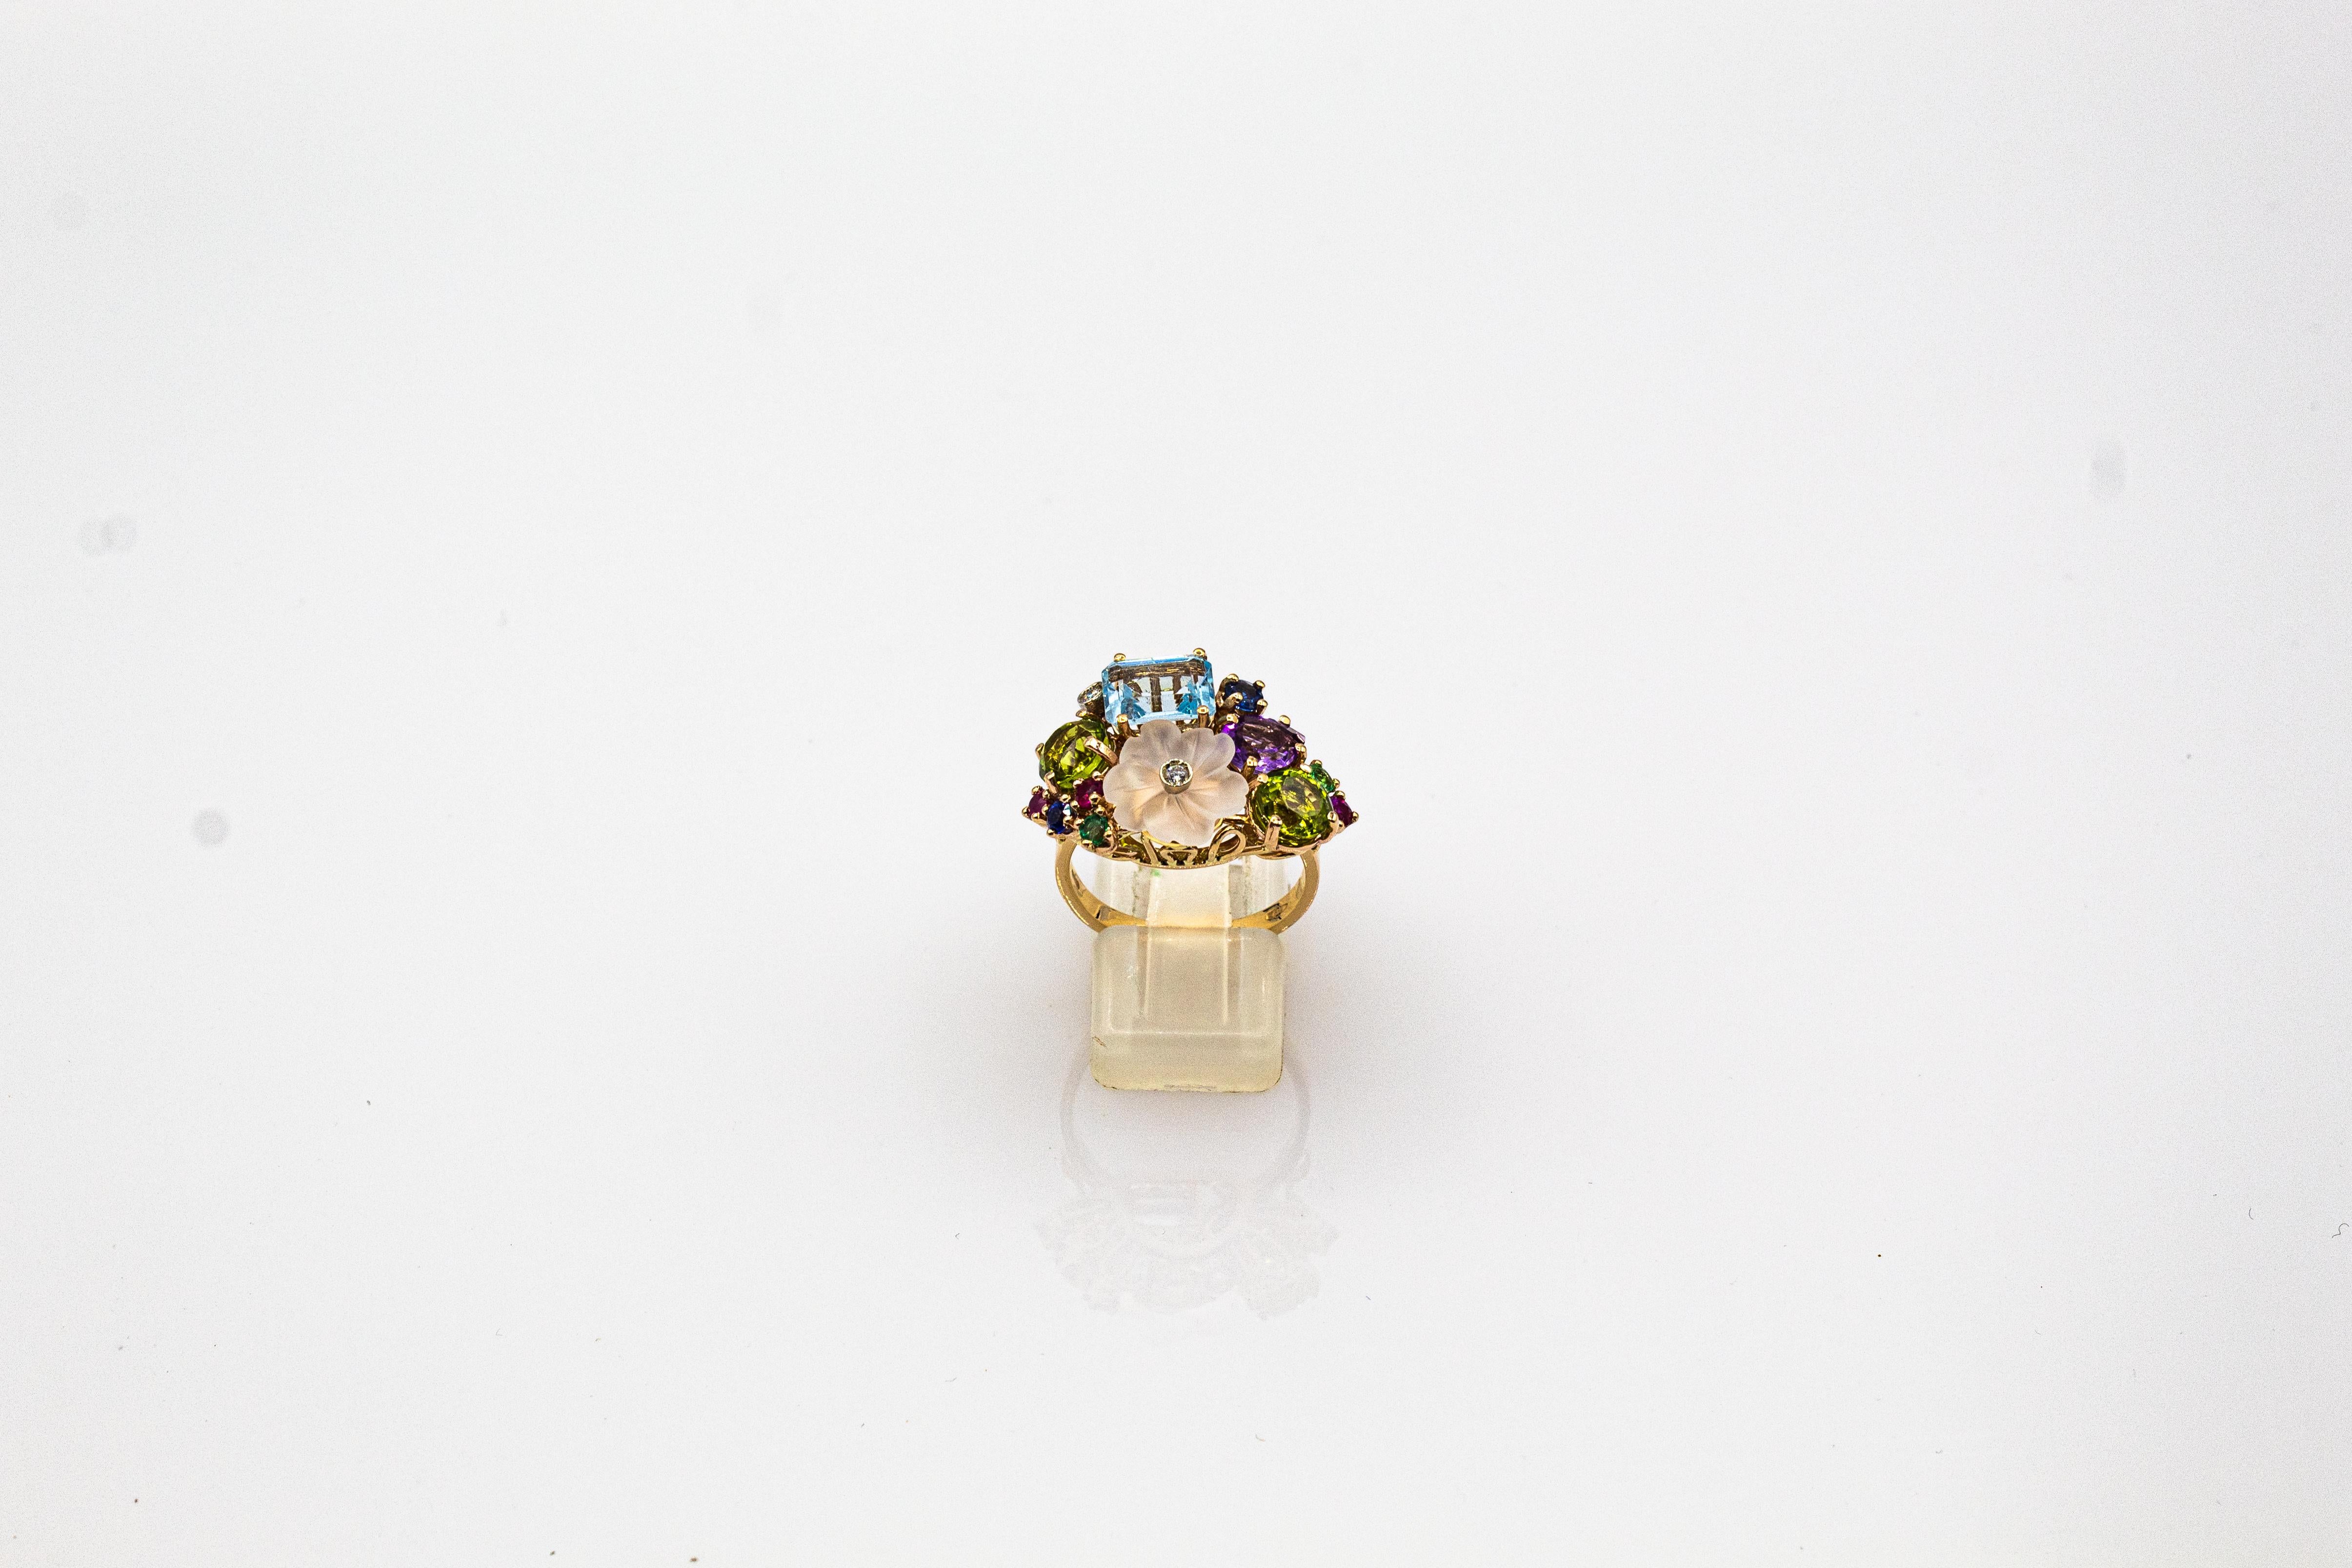 Brilliant Cut Art Nouveau Style Diamond Emerald Ruby Sapphire Amethyst Cocktail “Flowers” Ring For Sale